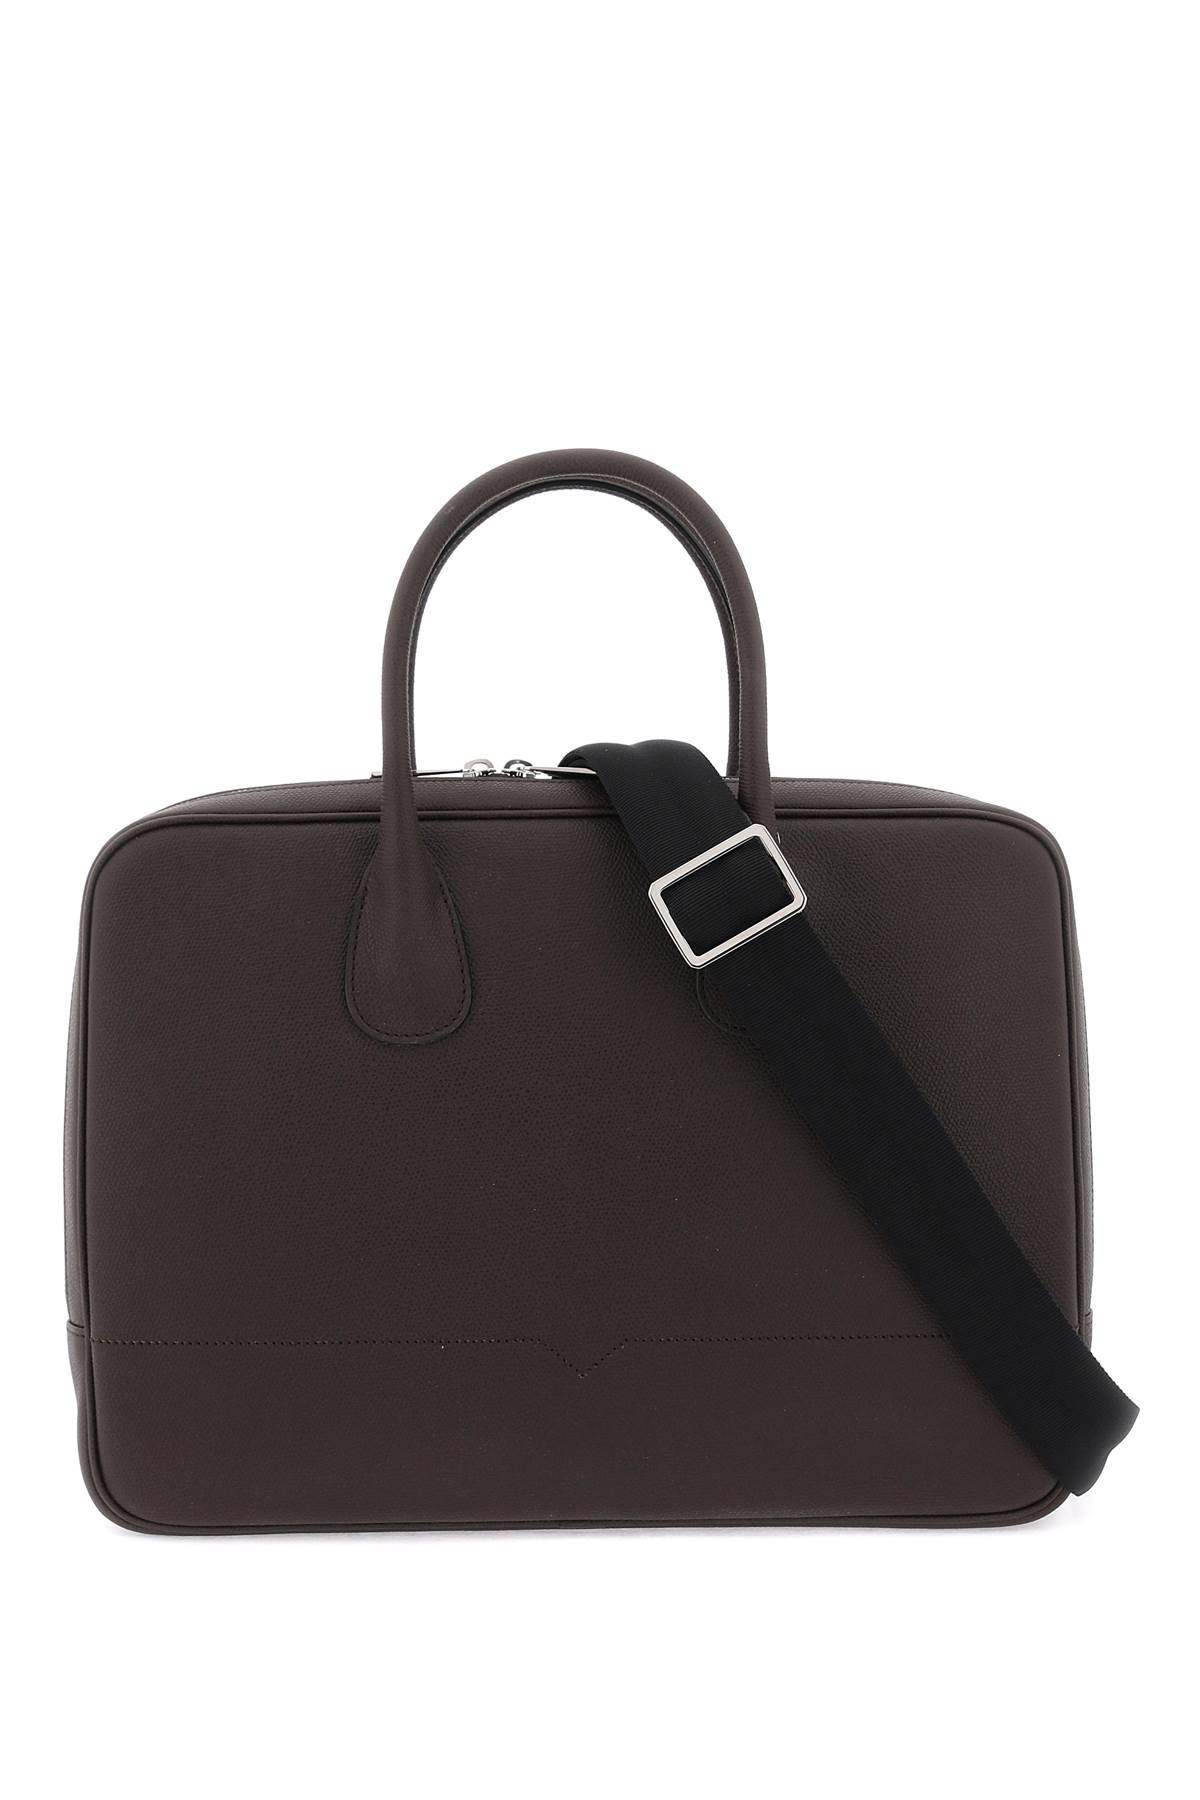 Valextra VALEXTRA leather business bag